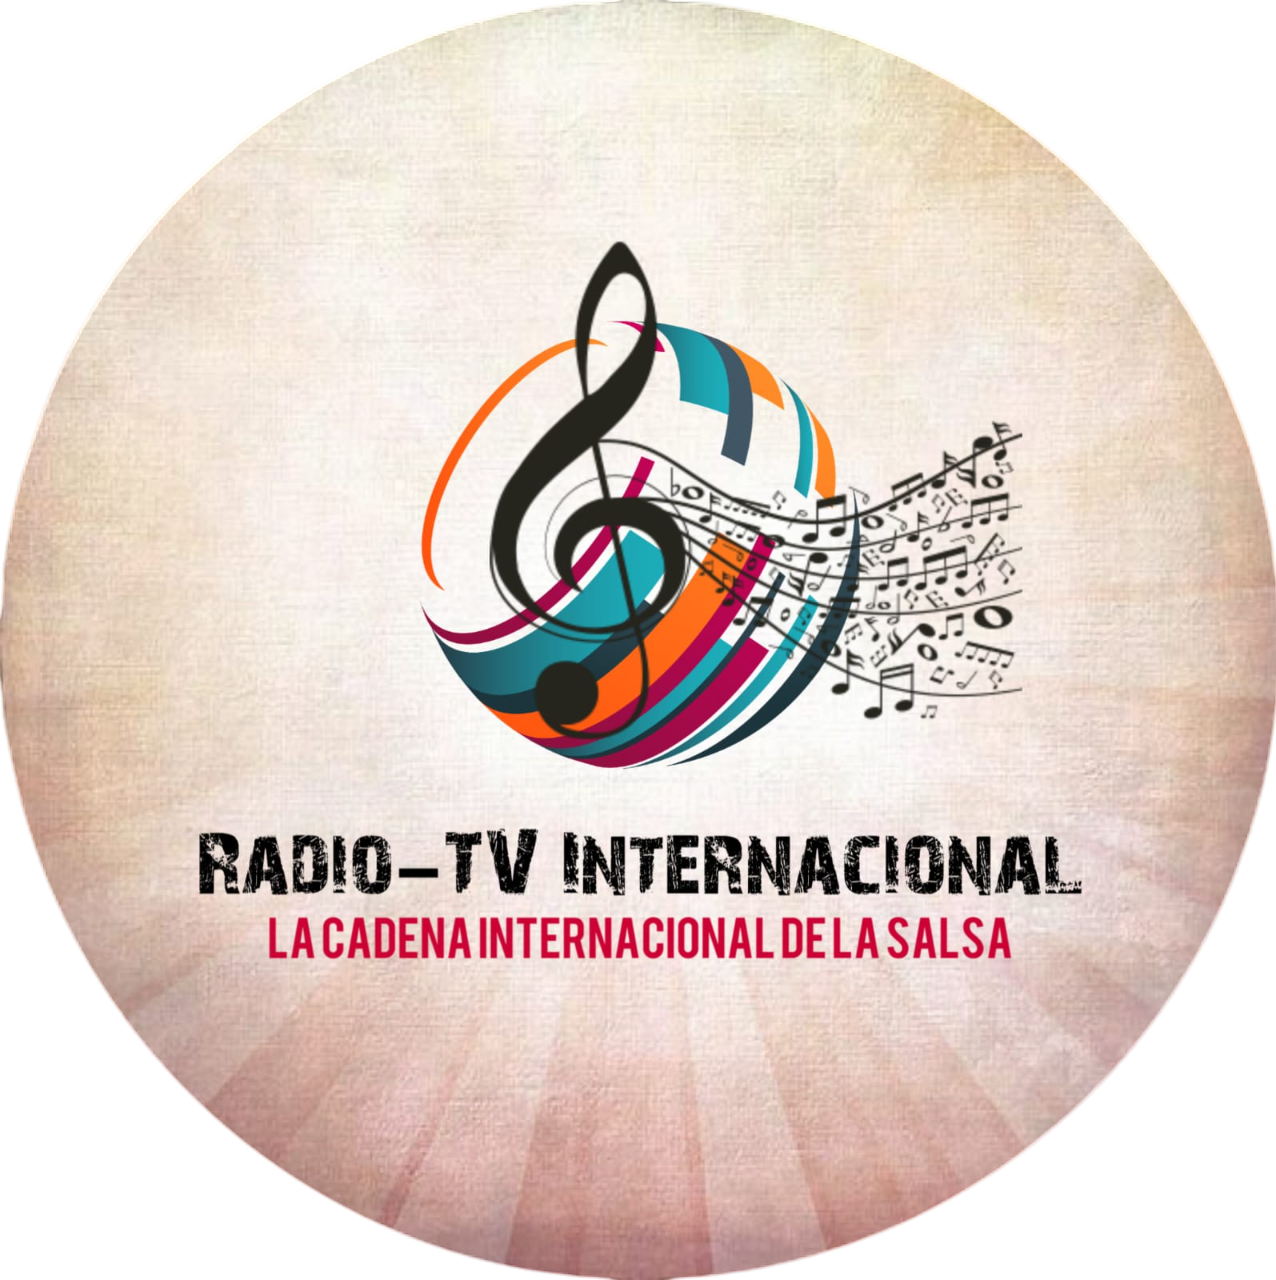 Radio -TV Internacional